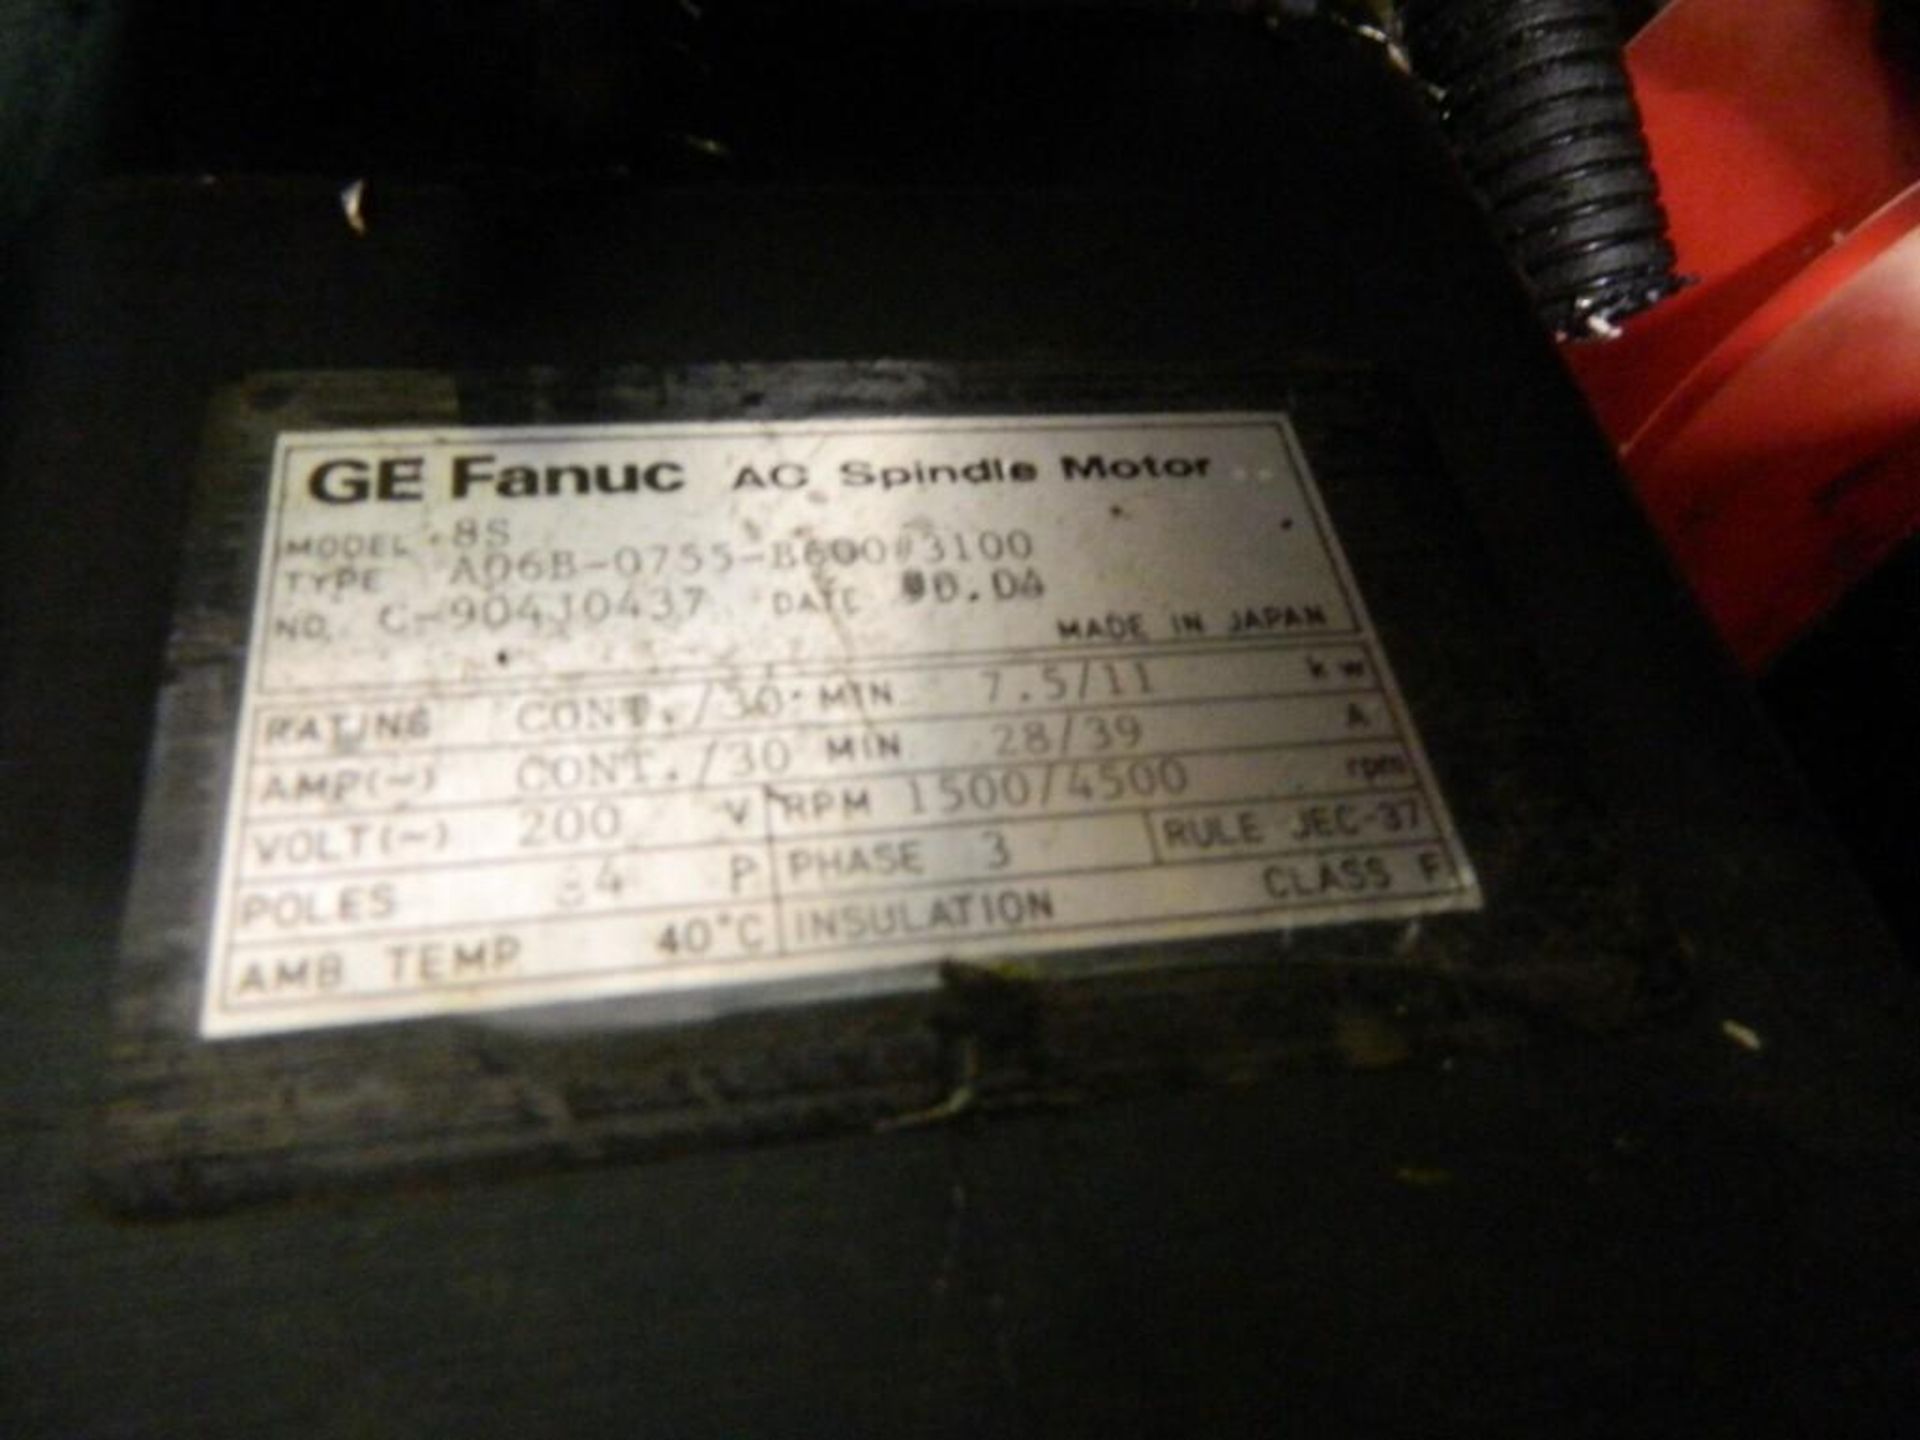 Fanuc #A06B-0755-B600 #3100 Spindle Motor - Image 5 of 5